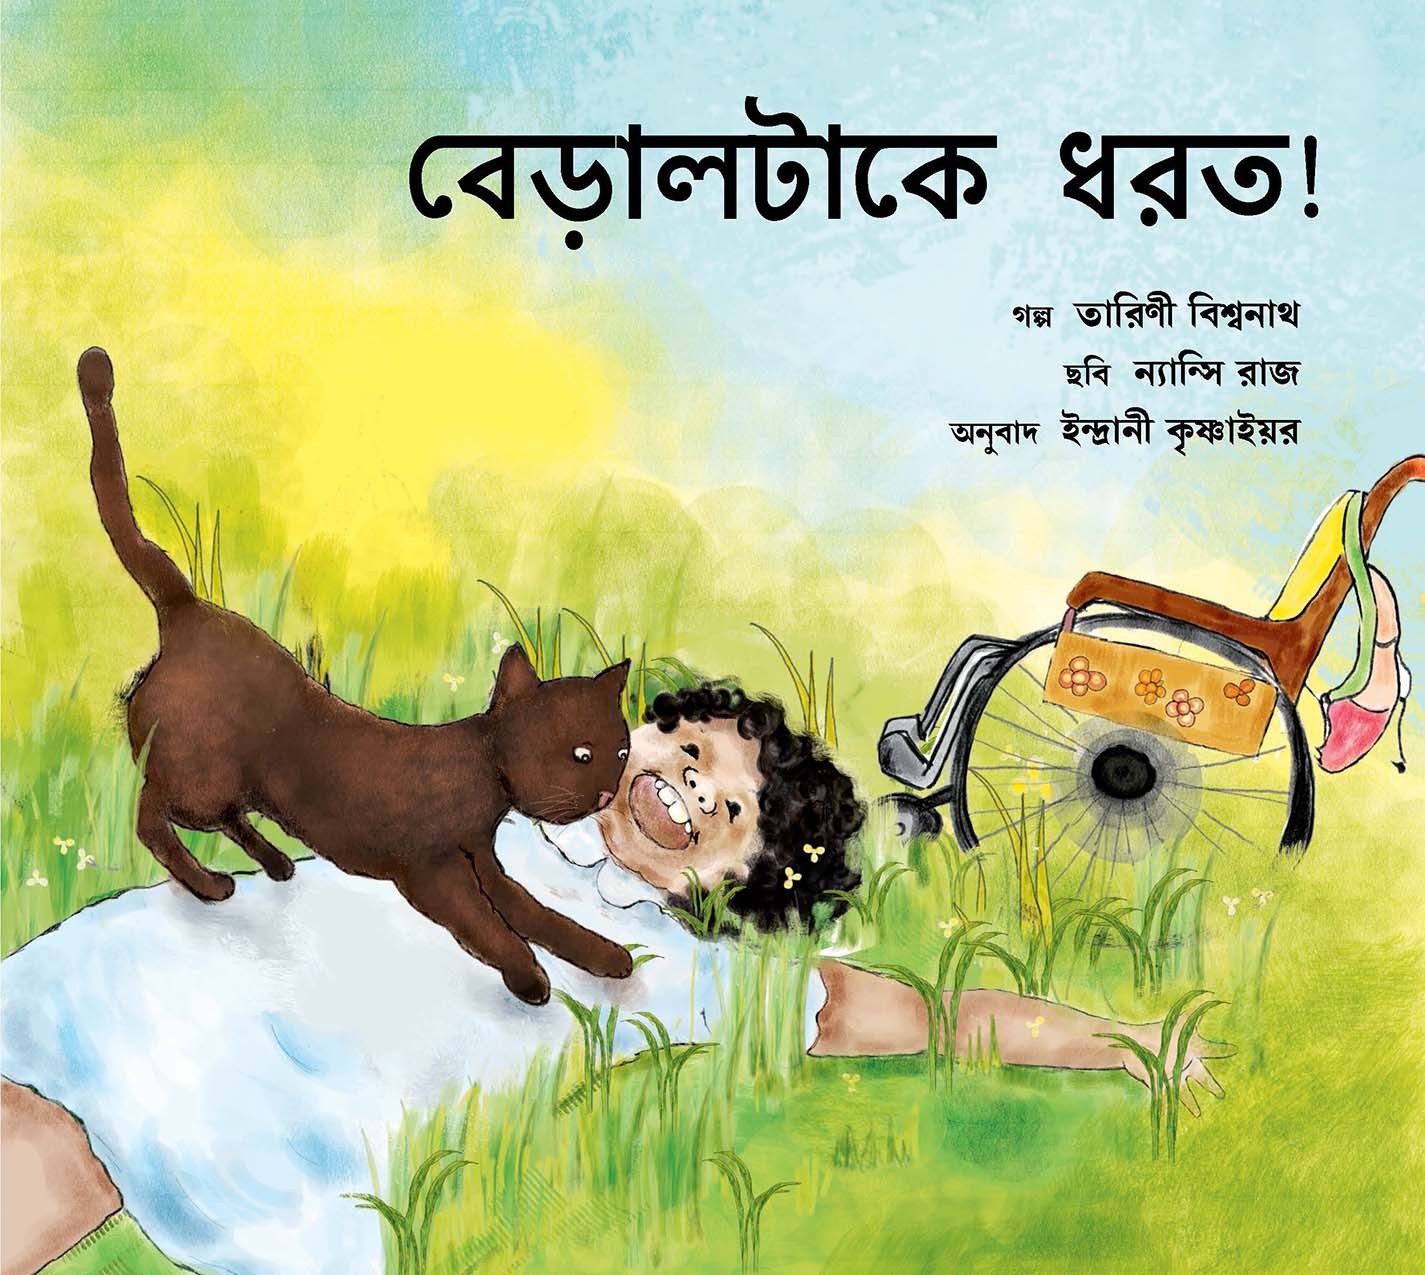 Catch That Cat/Bedaaltakey Dhorto! (Bengali)